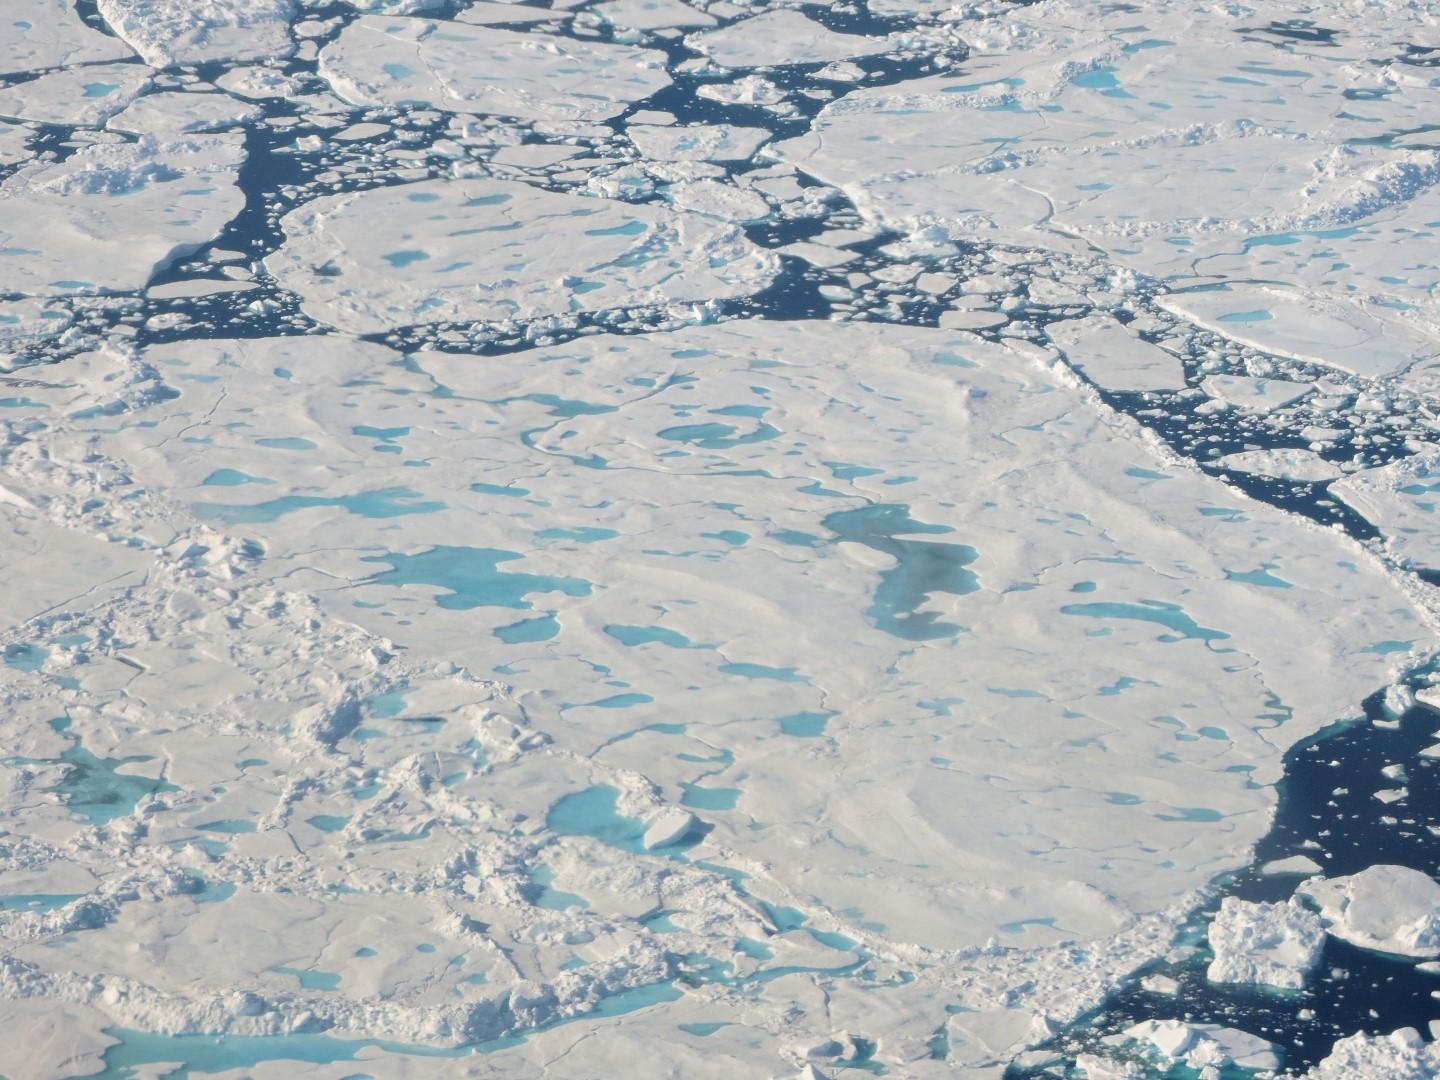 NASA Scientists Seek to Improve Sea Ice Predictions